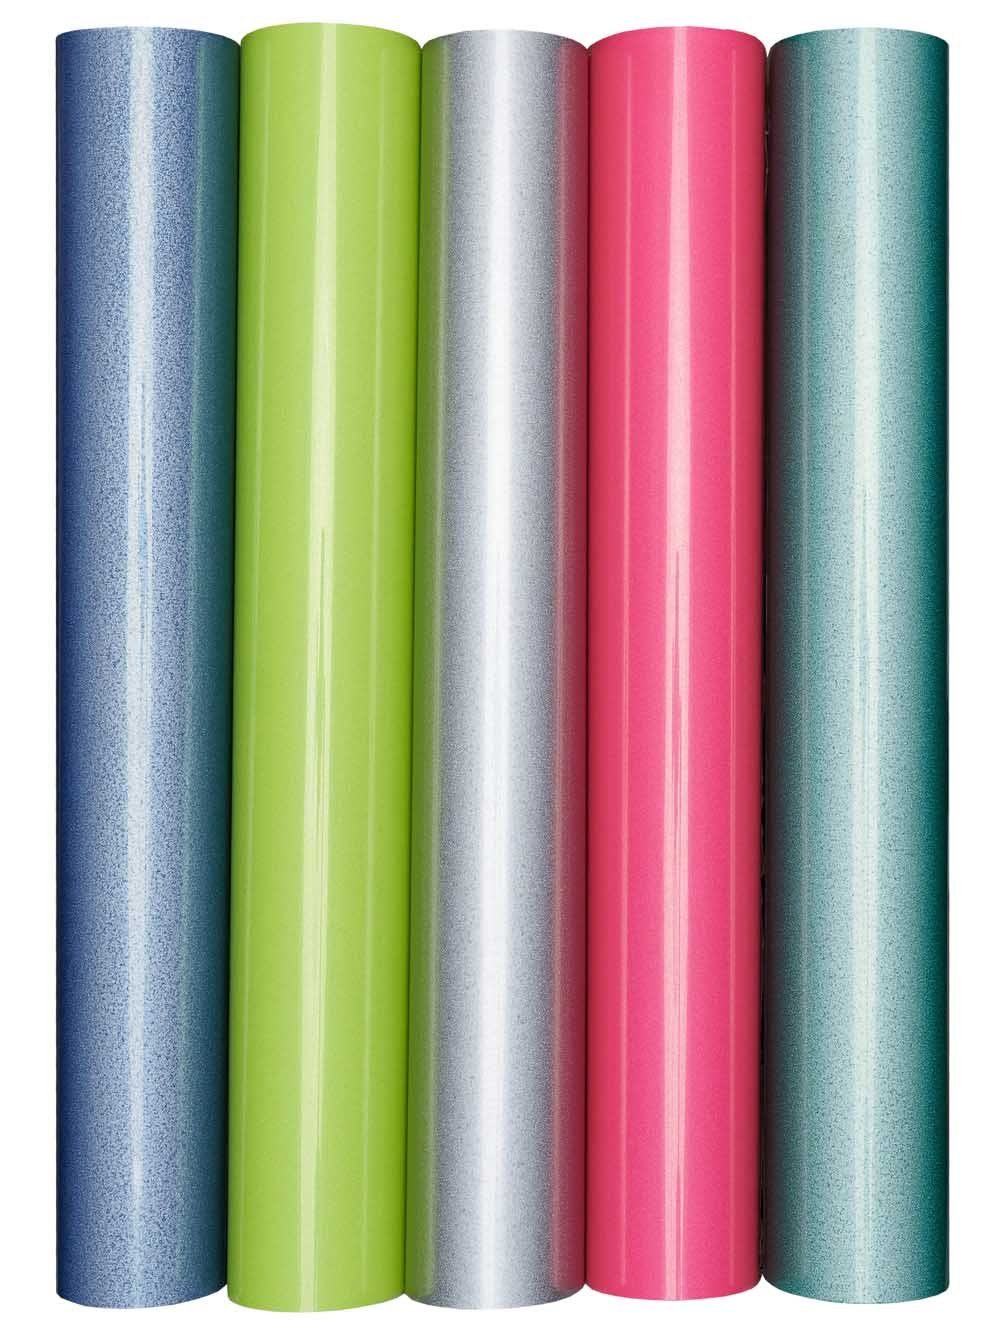 Hilltop Transparentpapier Reflektierende Transferfolie, Textilfolie, mehrfarbig, 30x20 cm Reflective Multicolor